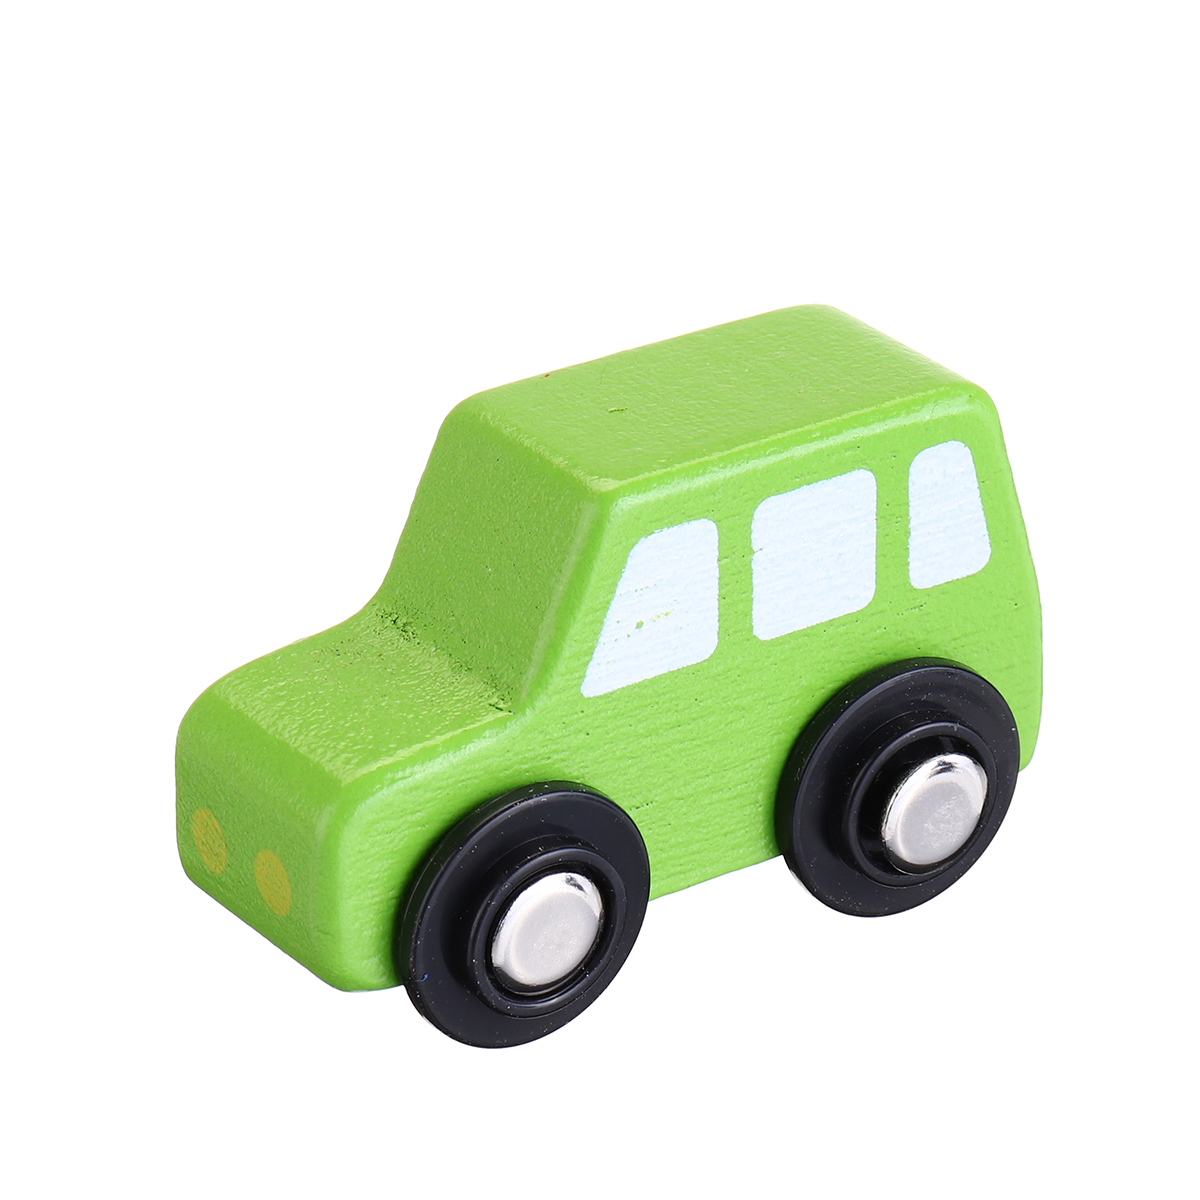 Beva-5-In-1-Truck-Model-Toy-Environmental-Wooden-Car-Load-Vehicle-Kid-Developmental-Toys-from-Xiaomi-1418866-9